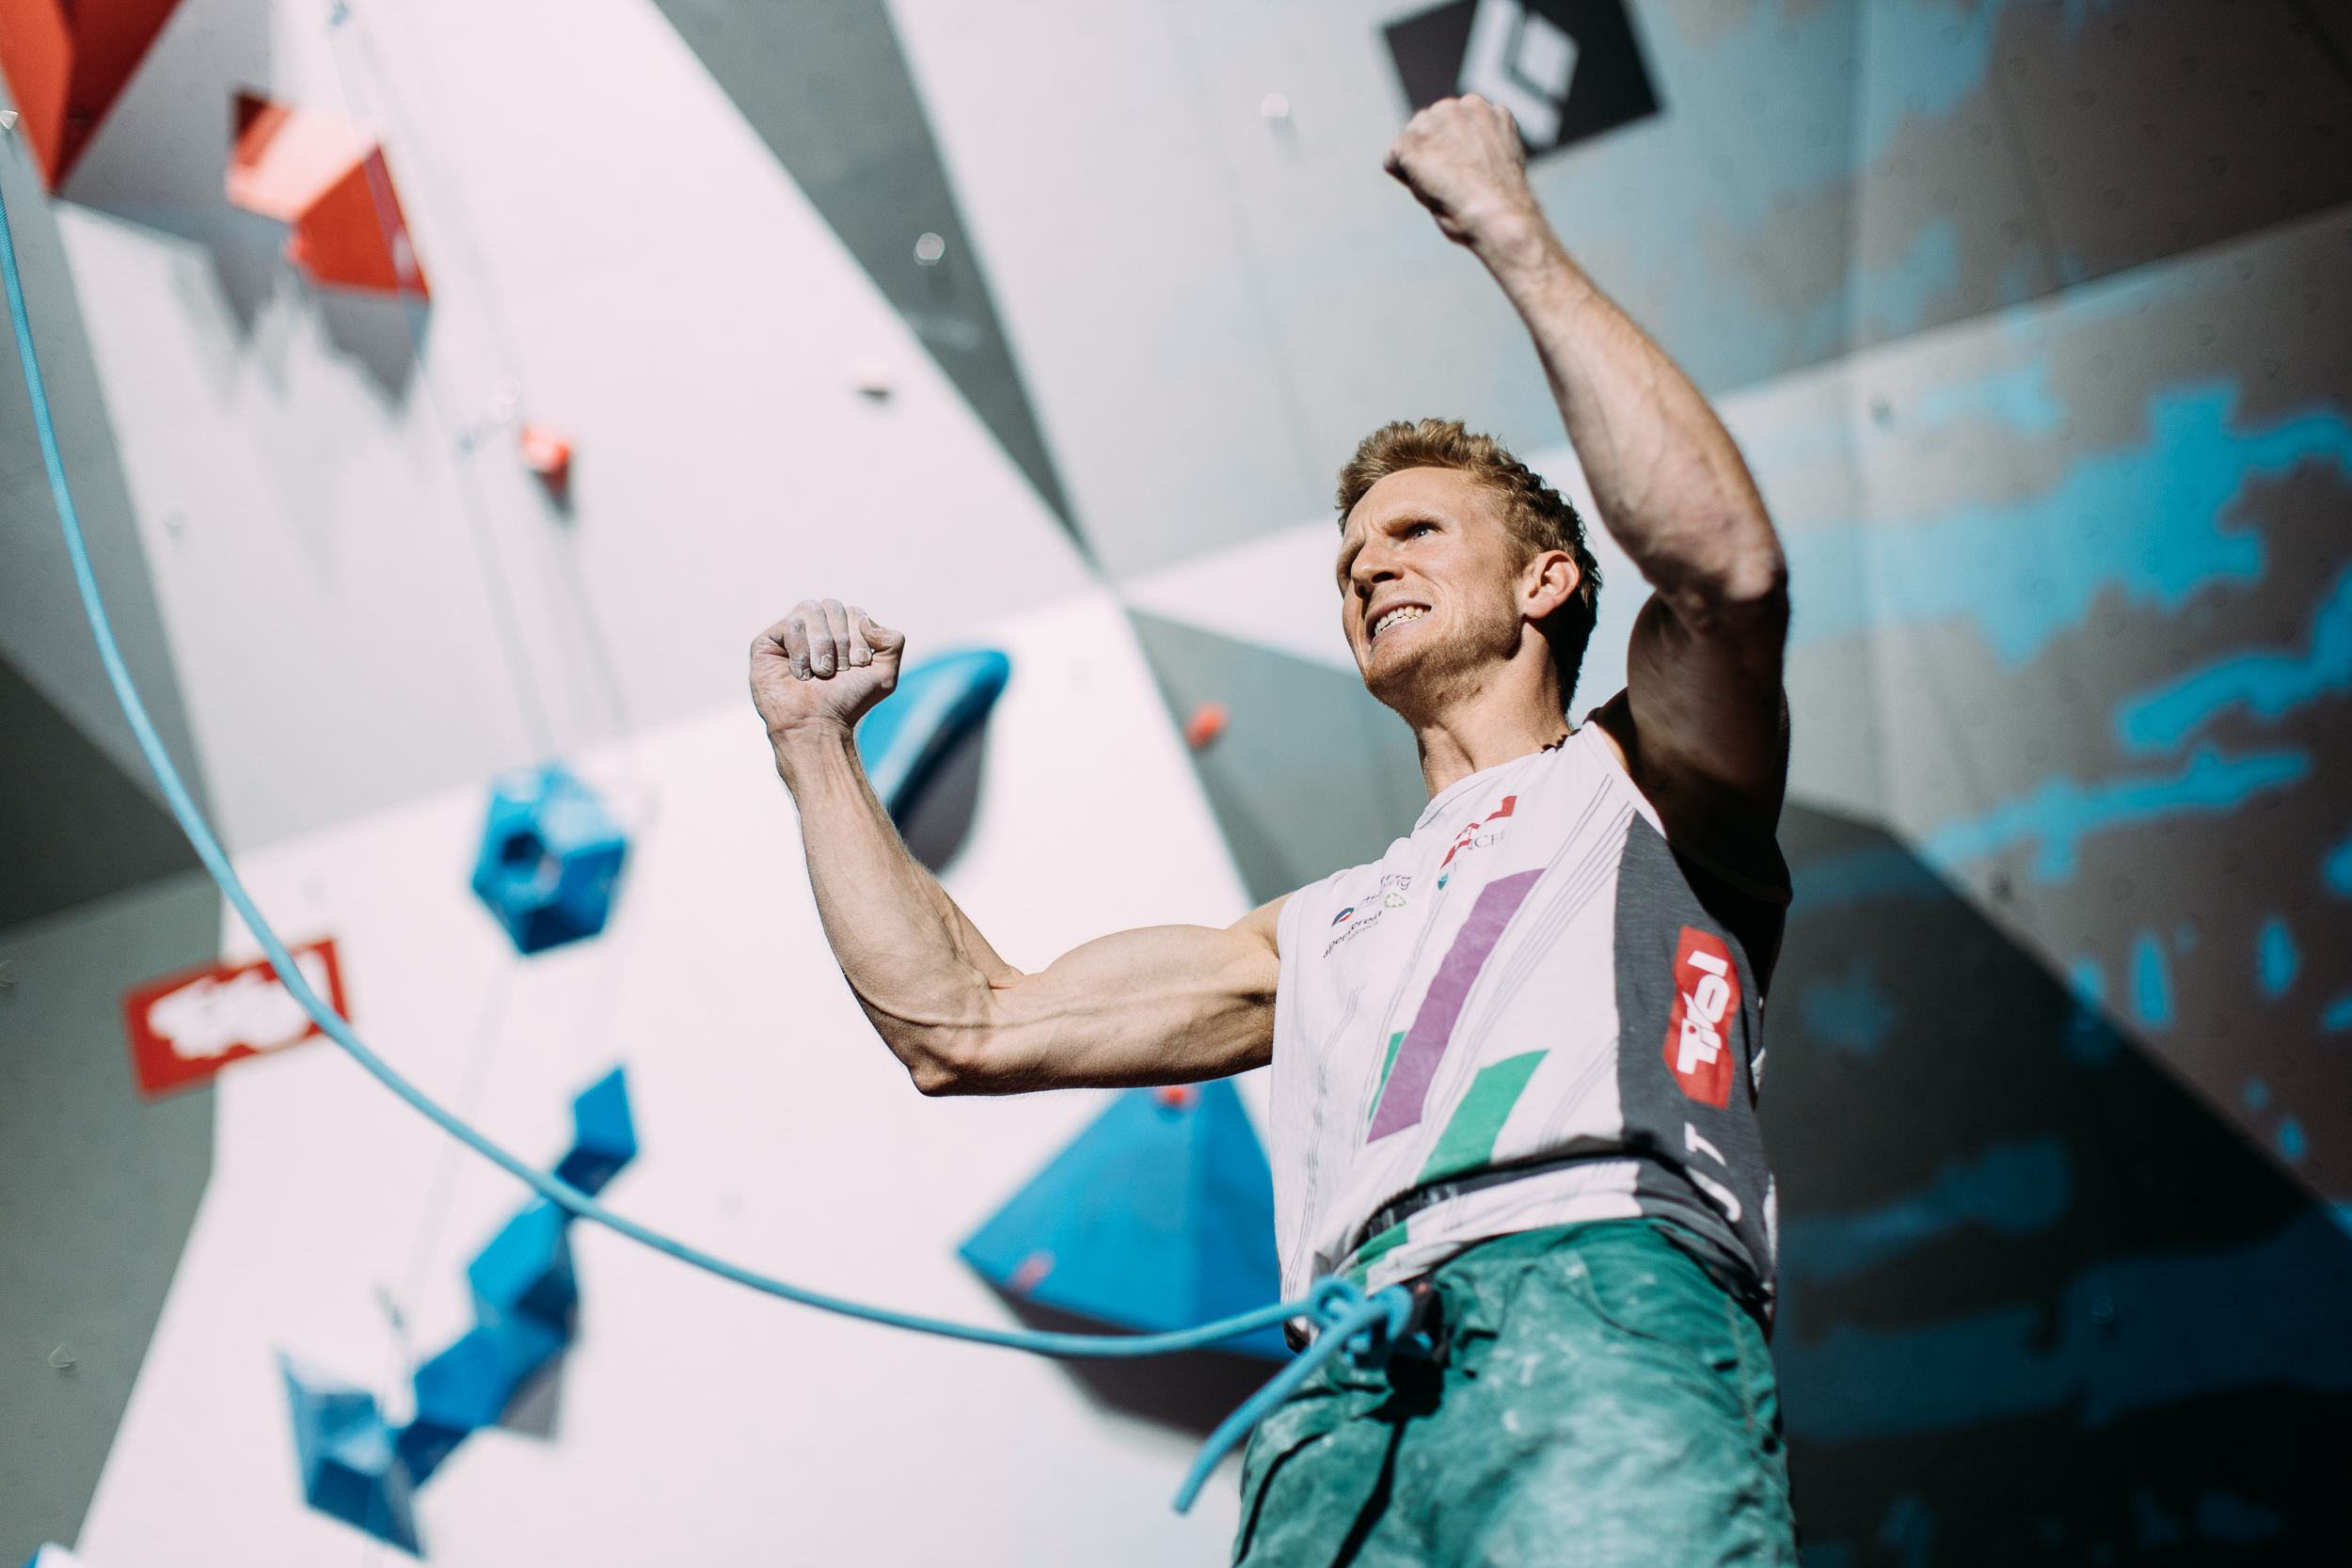 Jakob Schubert - Lead Final, WC IBK 2018 - Photo by Elias Holzknecht